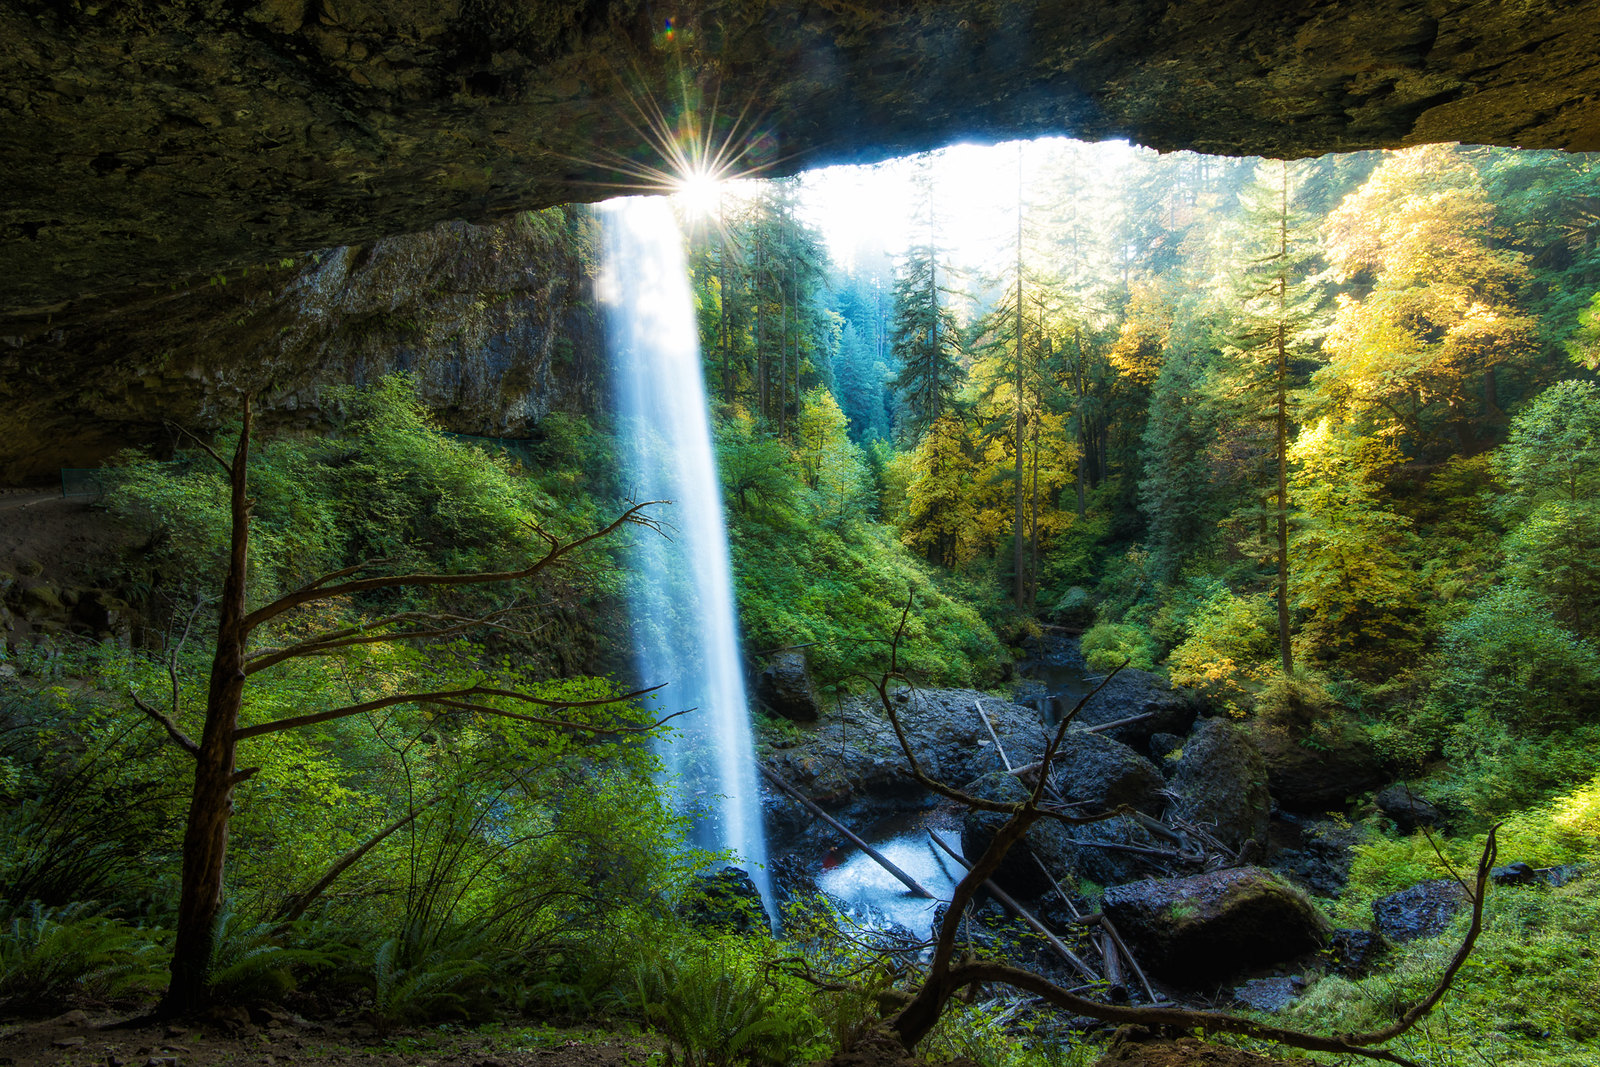 Four Breathtaking Fall Hikes to Take in Oregon